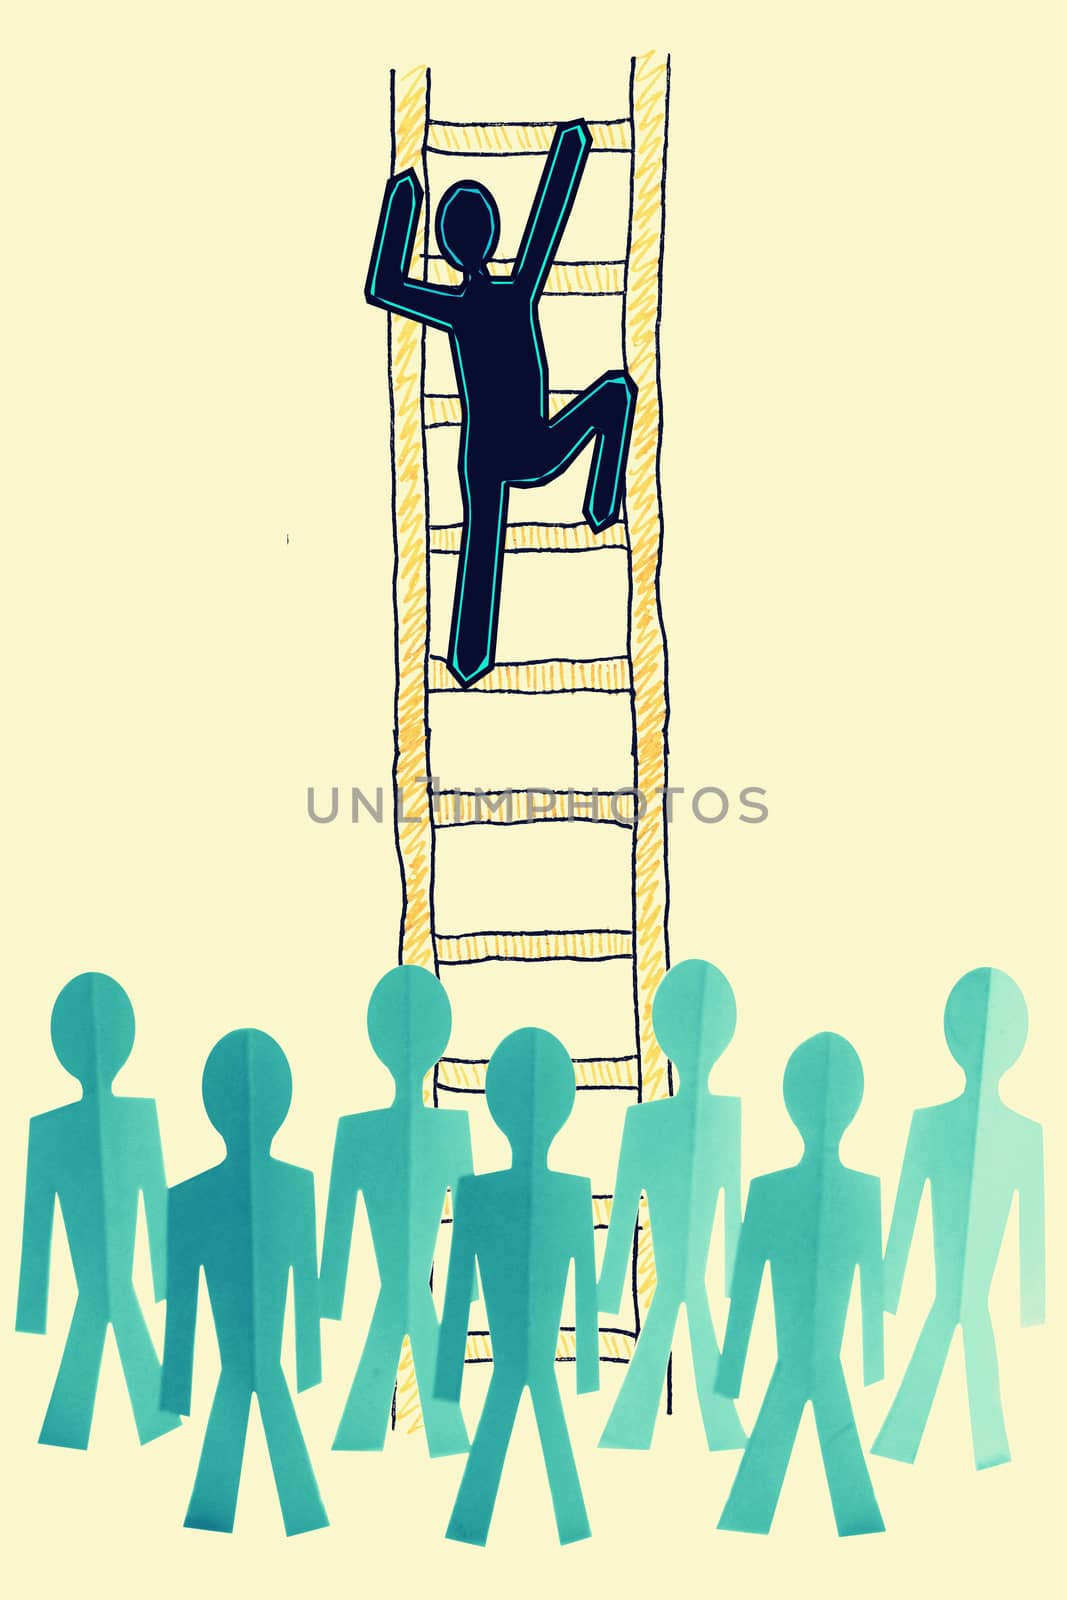 Paperman on Ladder, success ladder concept